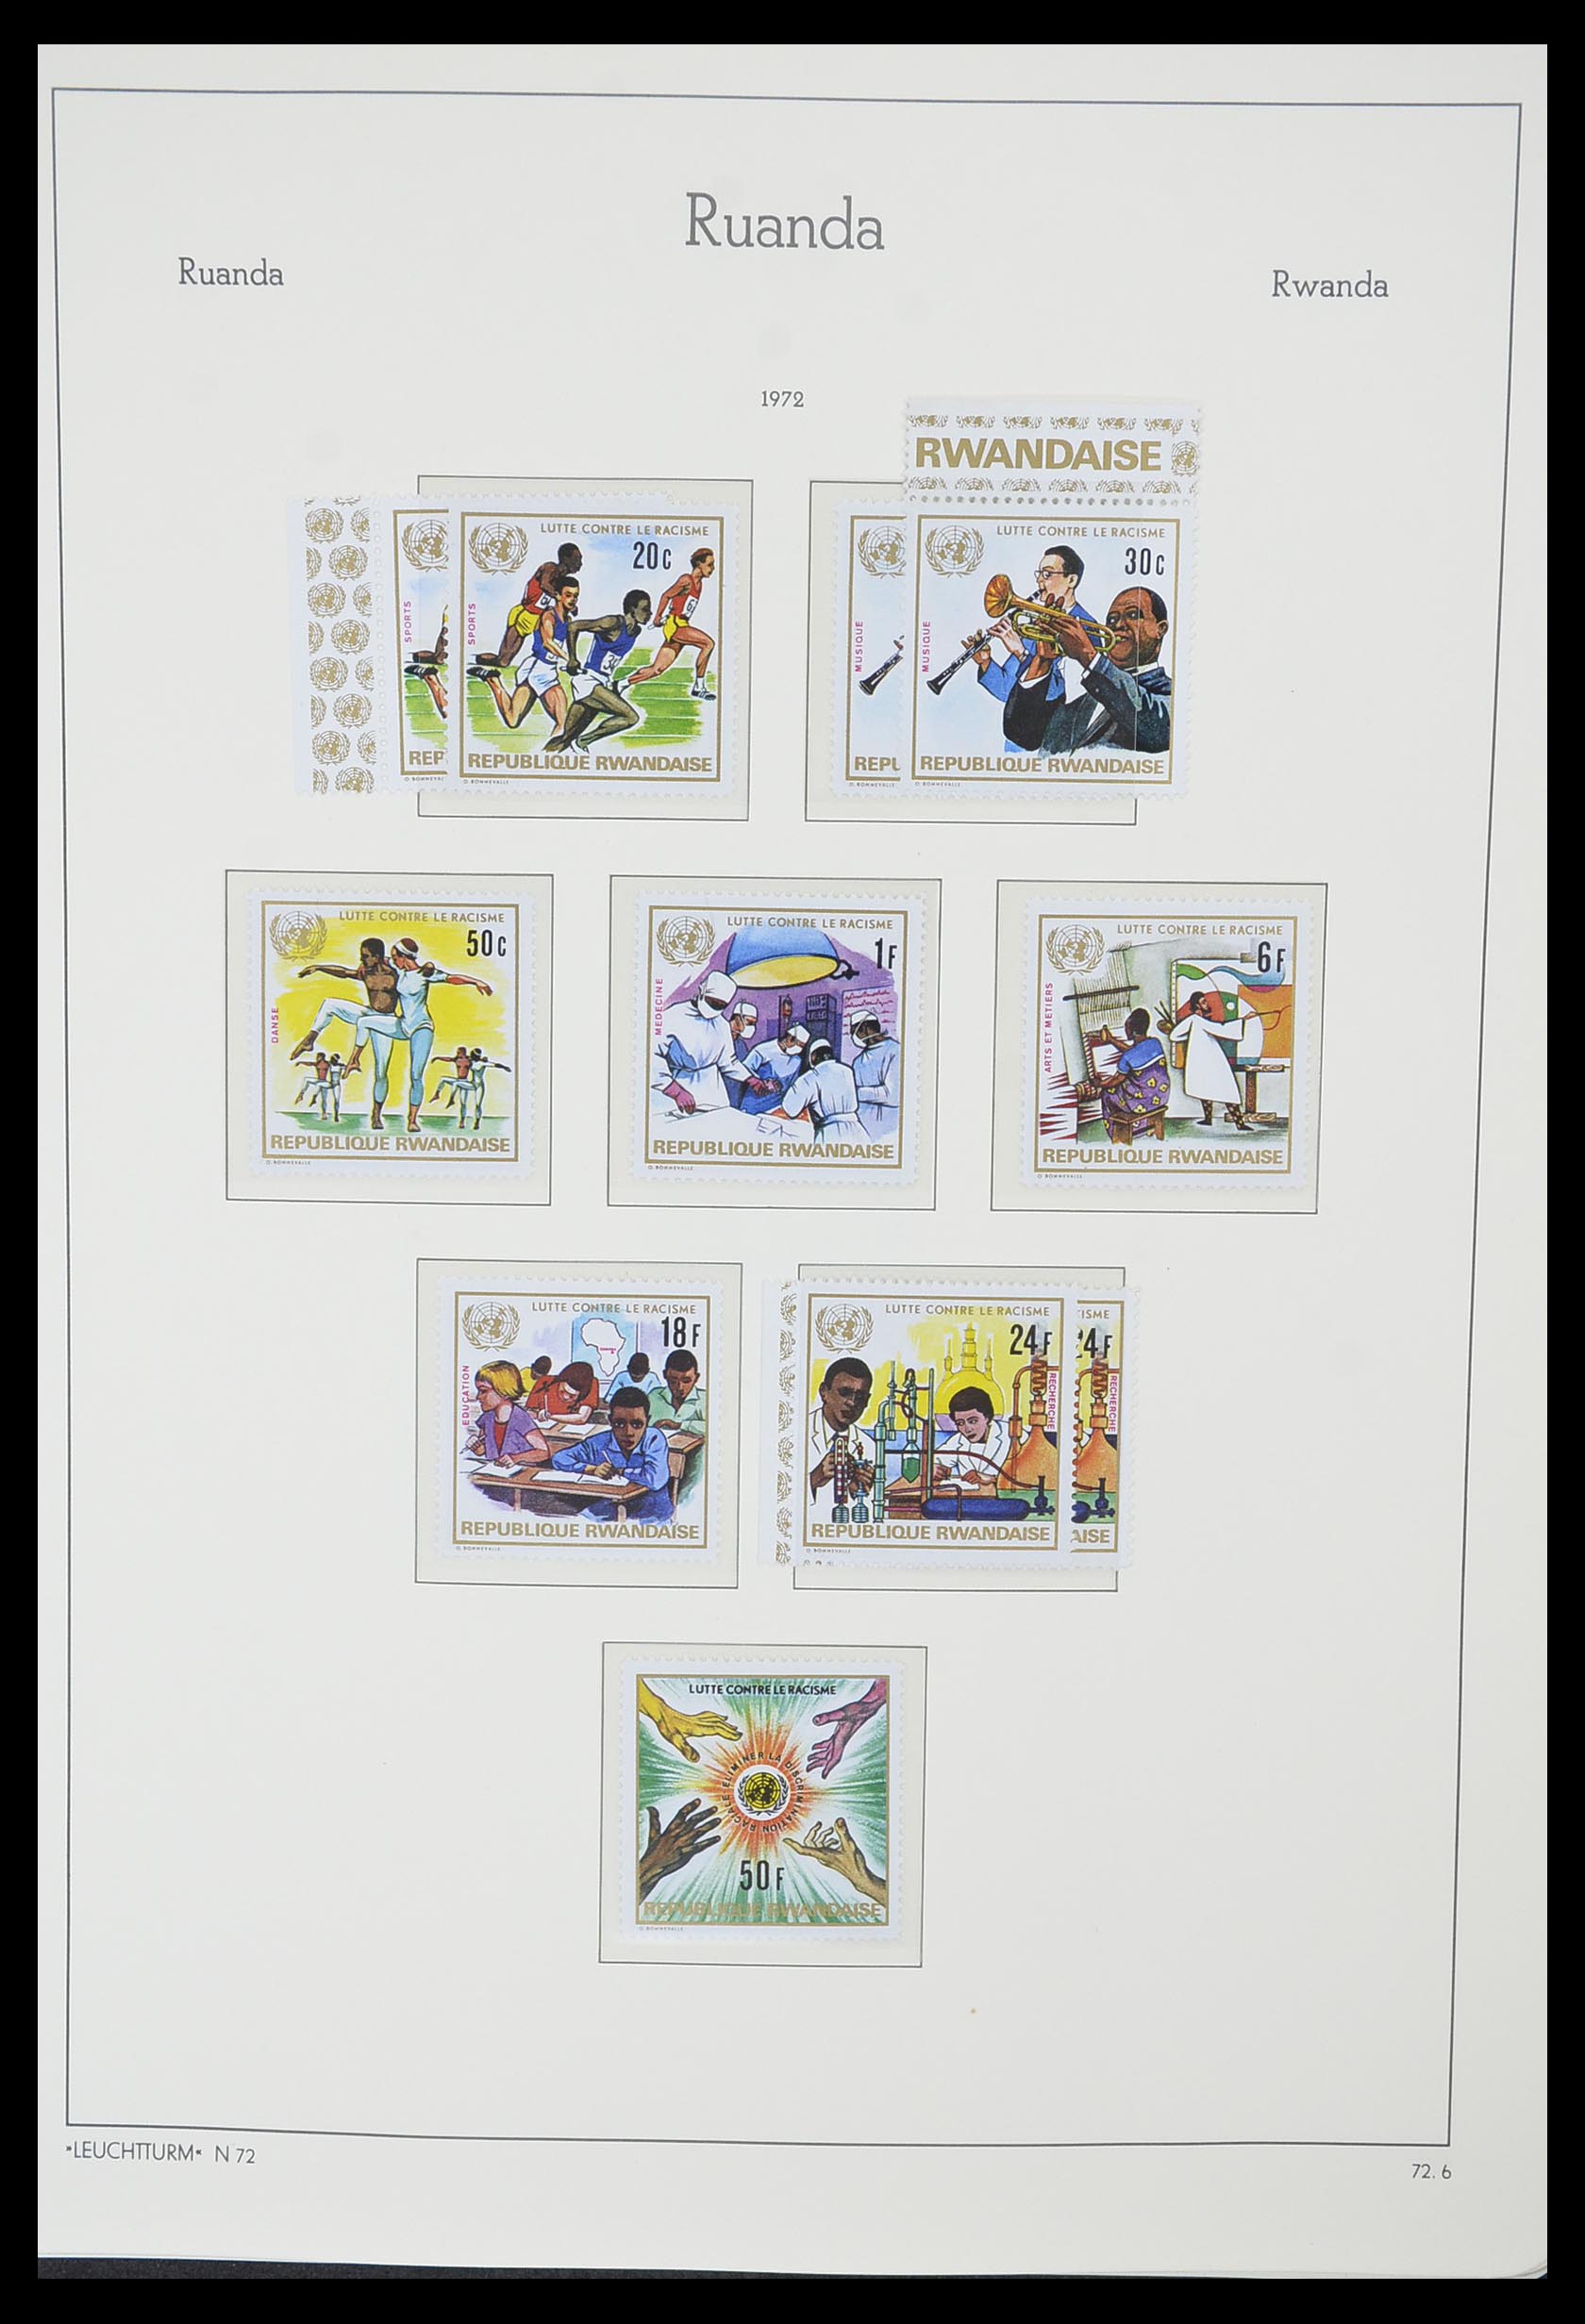 33767 073 - Stamp collection 33767 Rwanda 1962-1988.